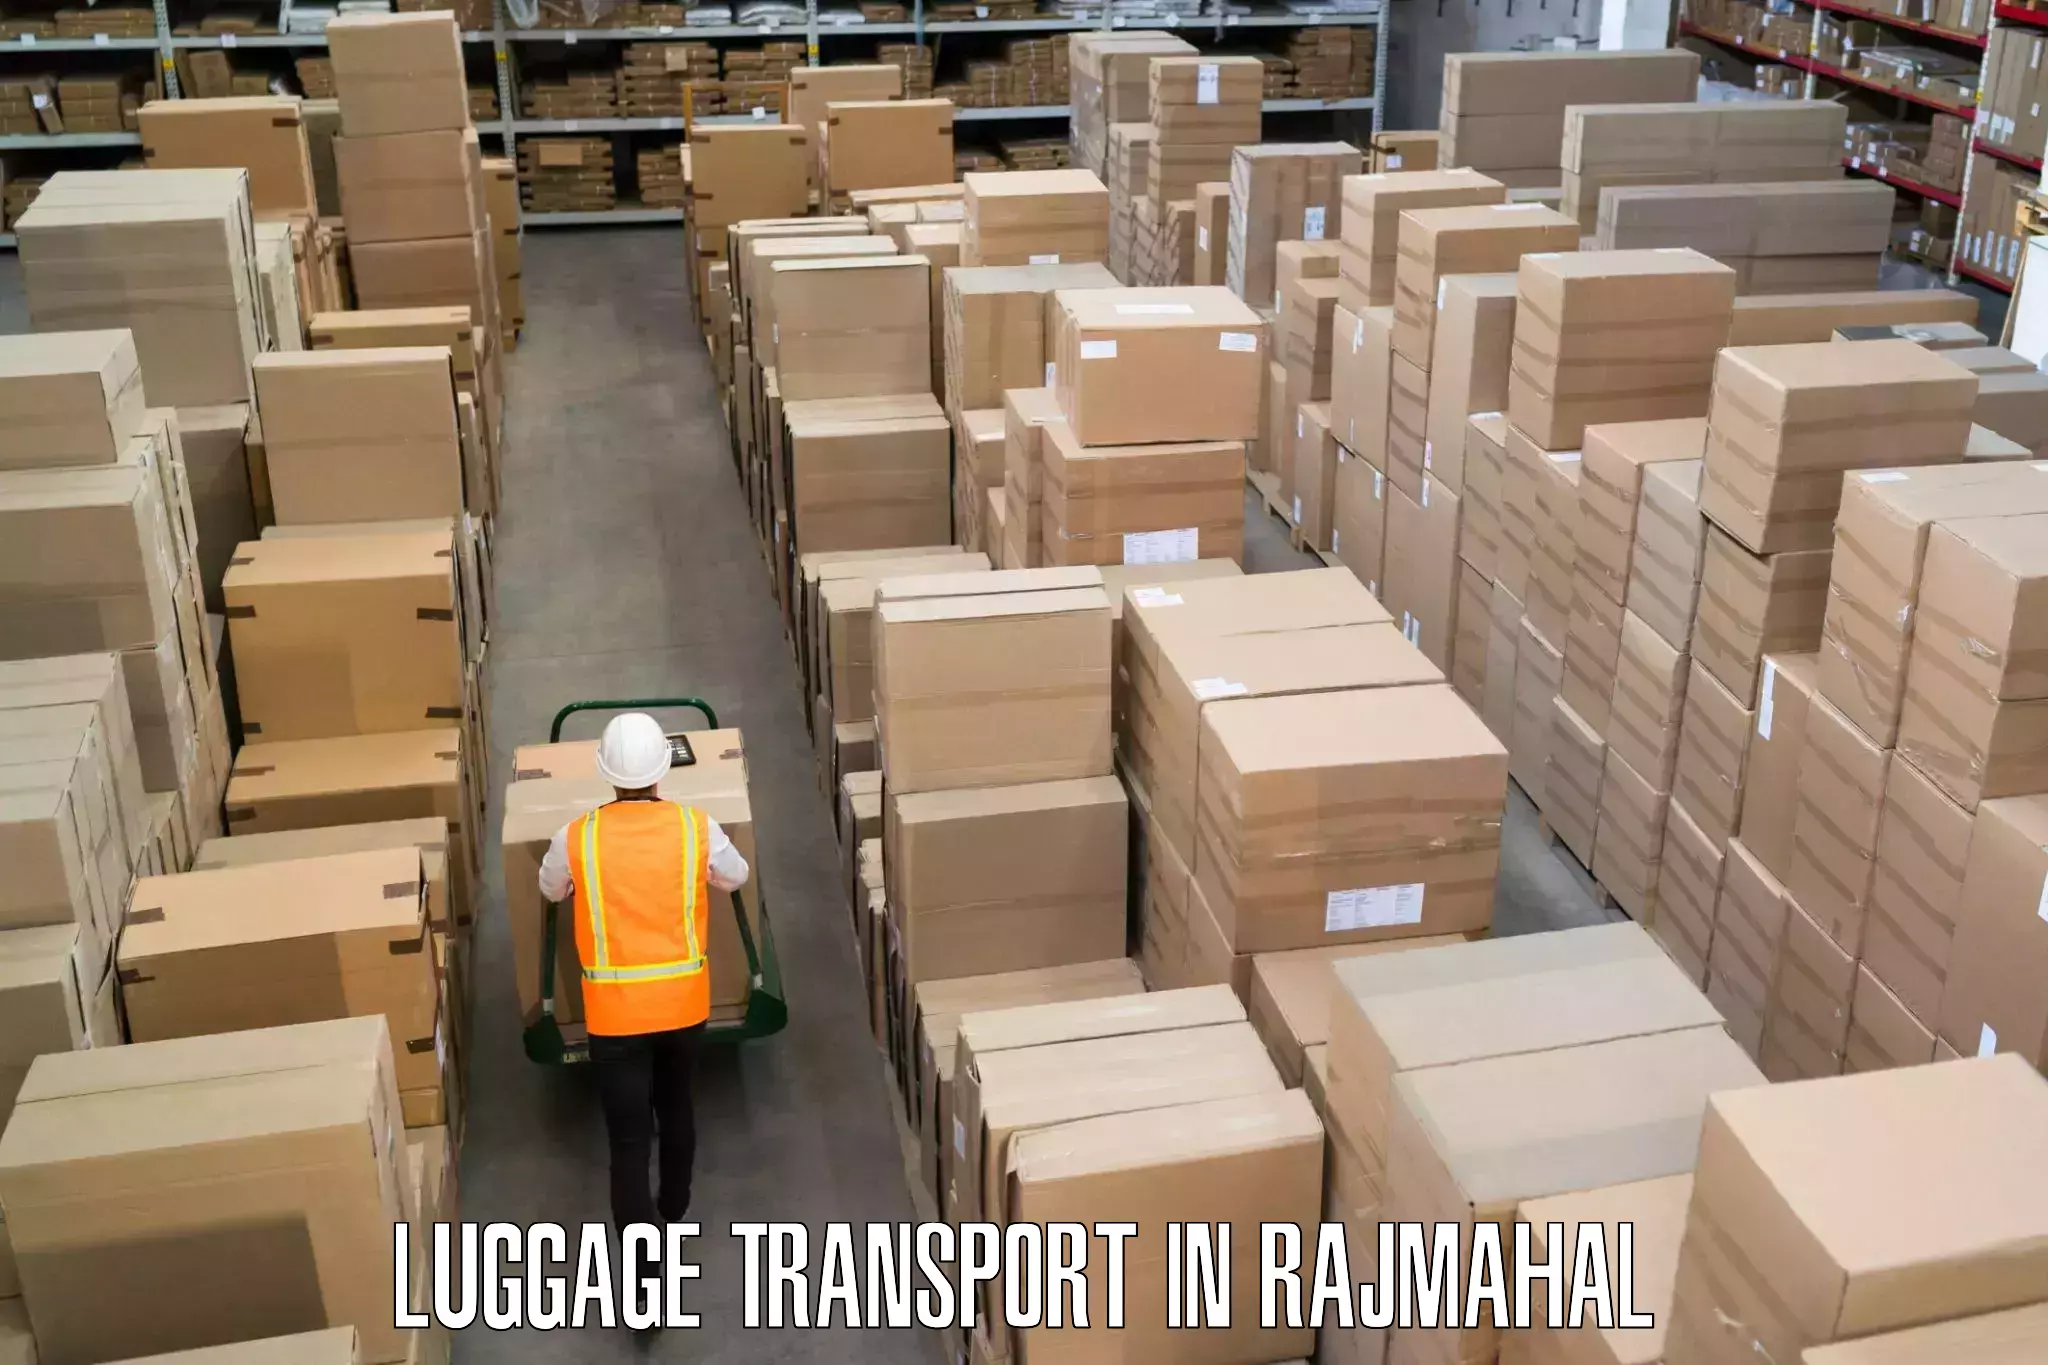 Express baggage shipping in Rajmahal